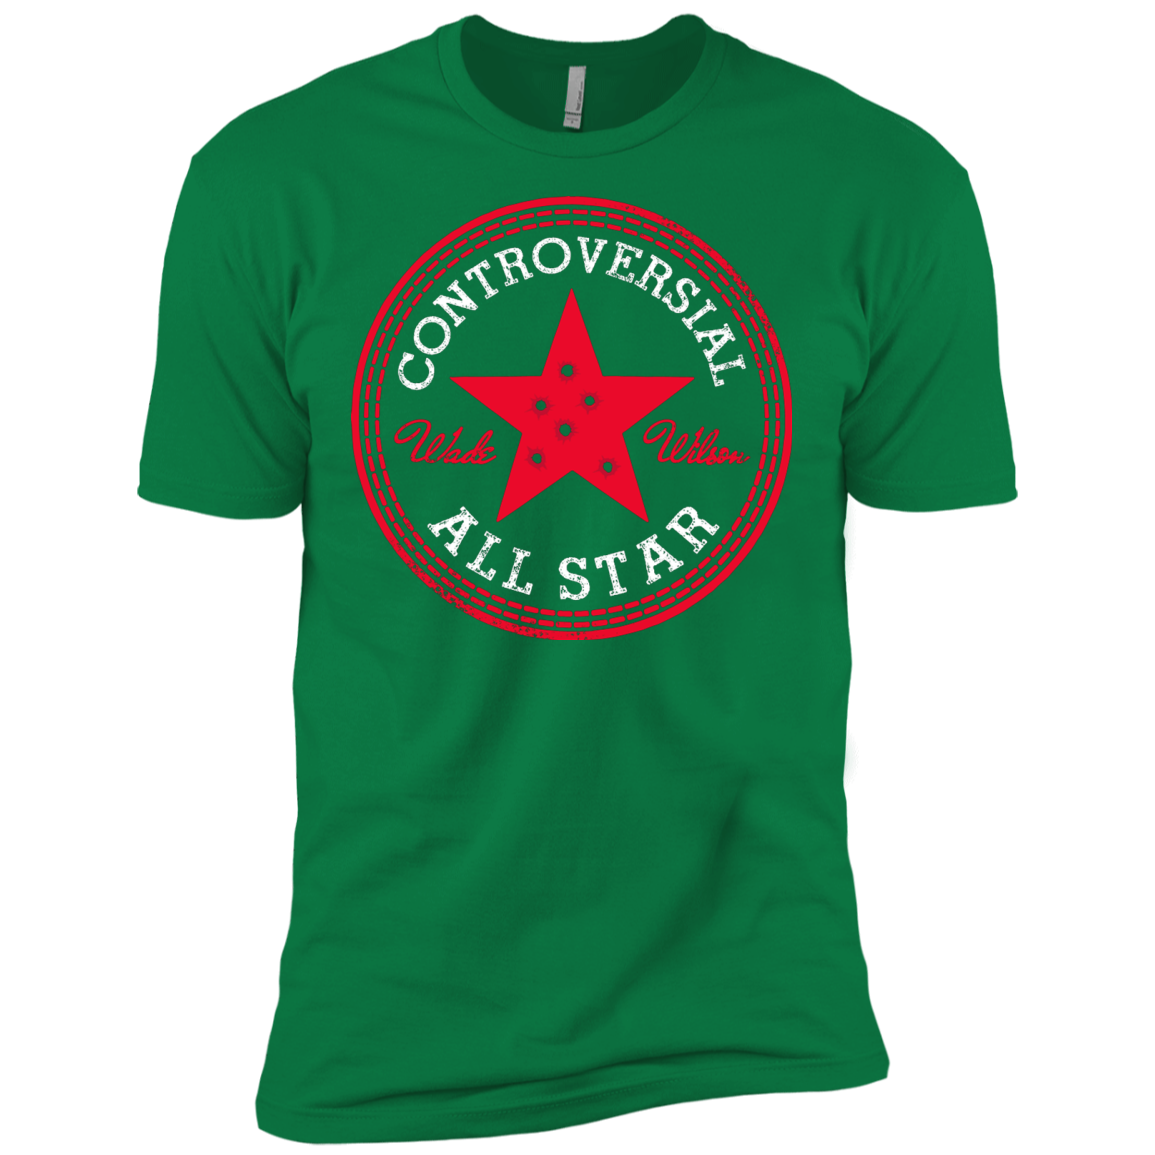 All Star Men's Premium T-Shirt